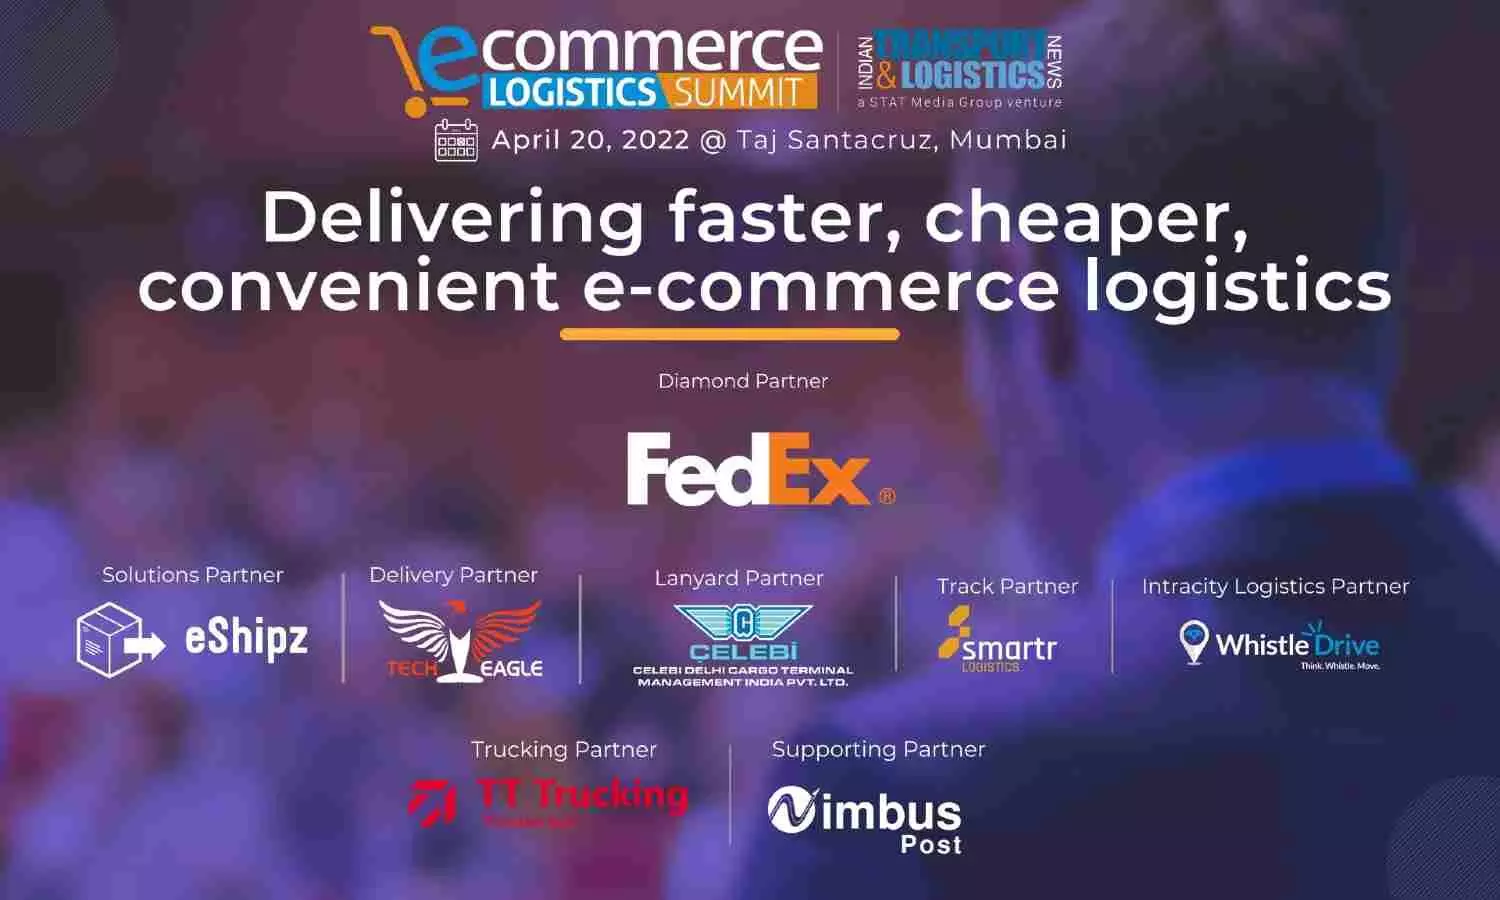 E-commerce Logistics Summit 2022 is live now!